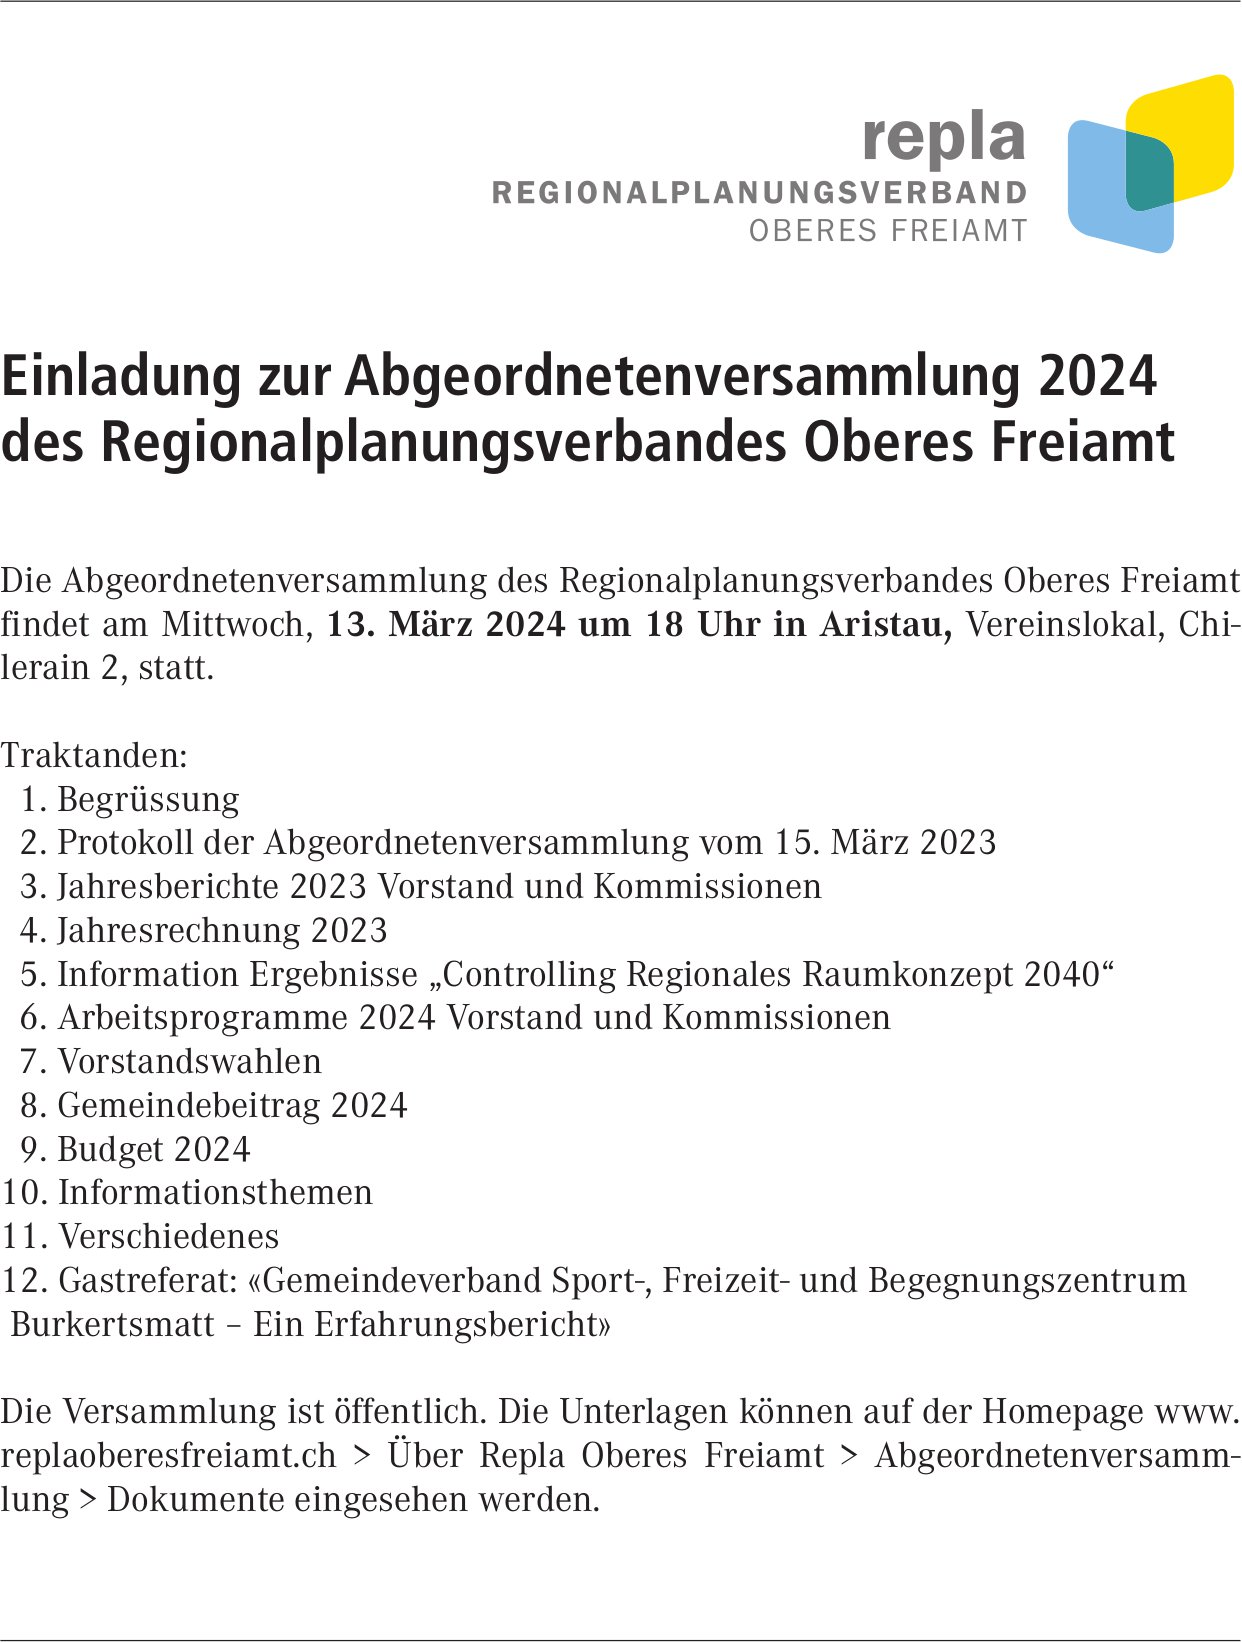 Abgeordnetenversammlung Regionalplanungsverband Oberes Freiamt, 13. März, Vereinslokal, Aristau